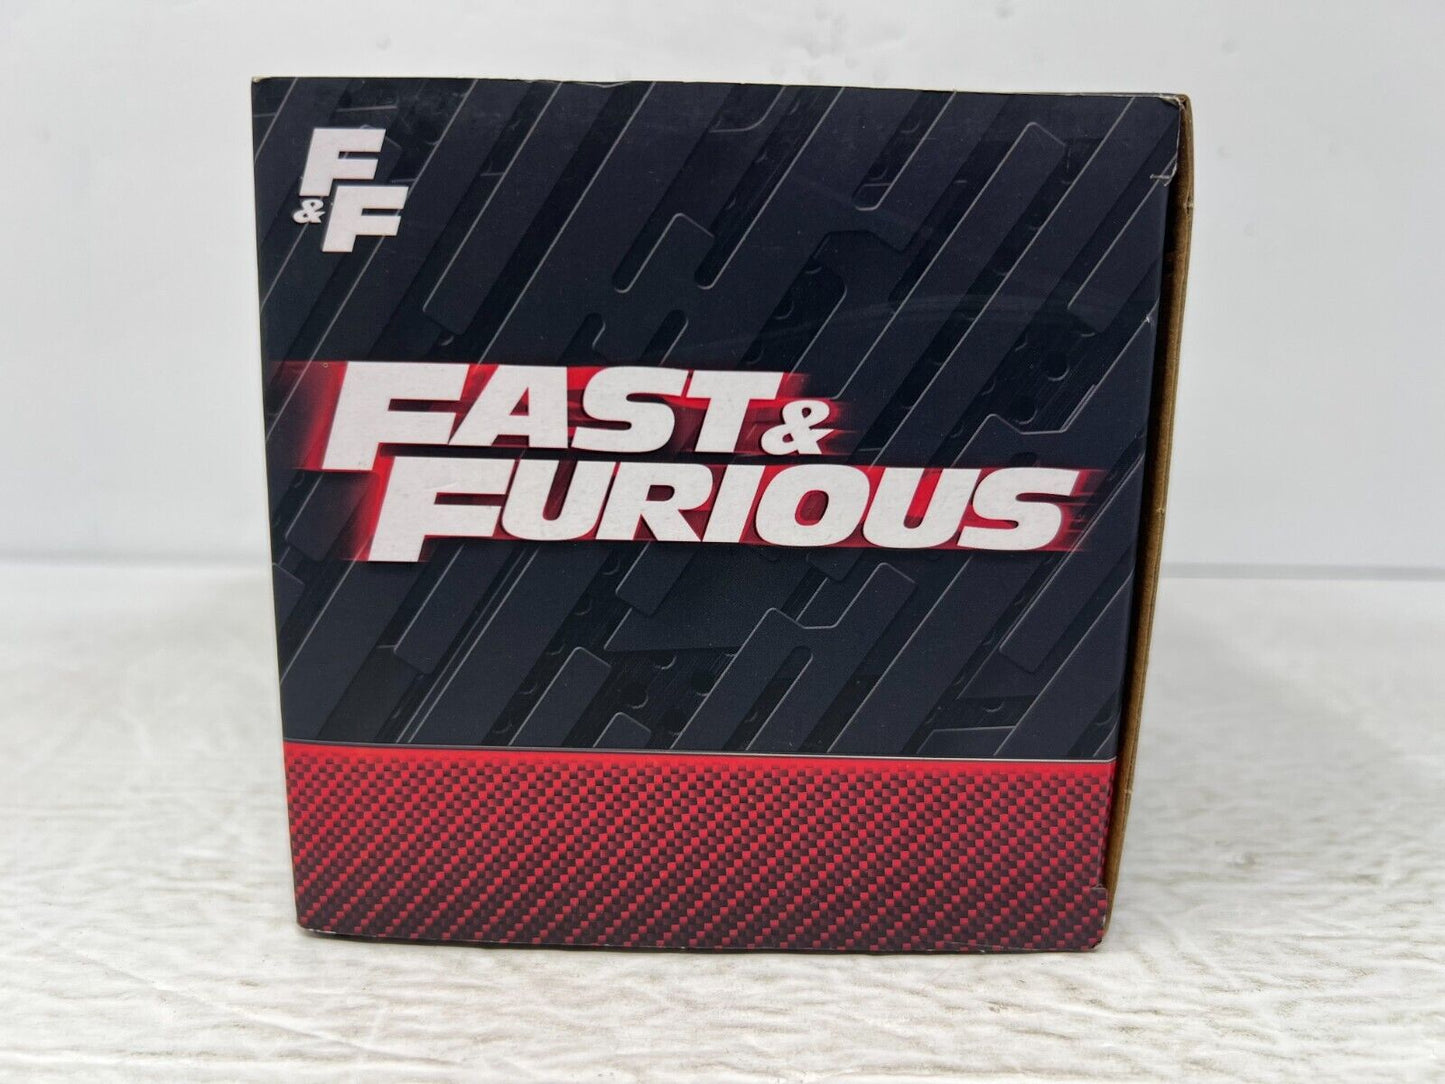 Jada Fast & Furious Brian's Toyota Supra 1:24 Diecast